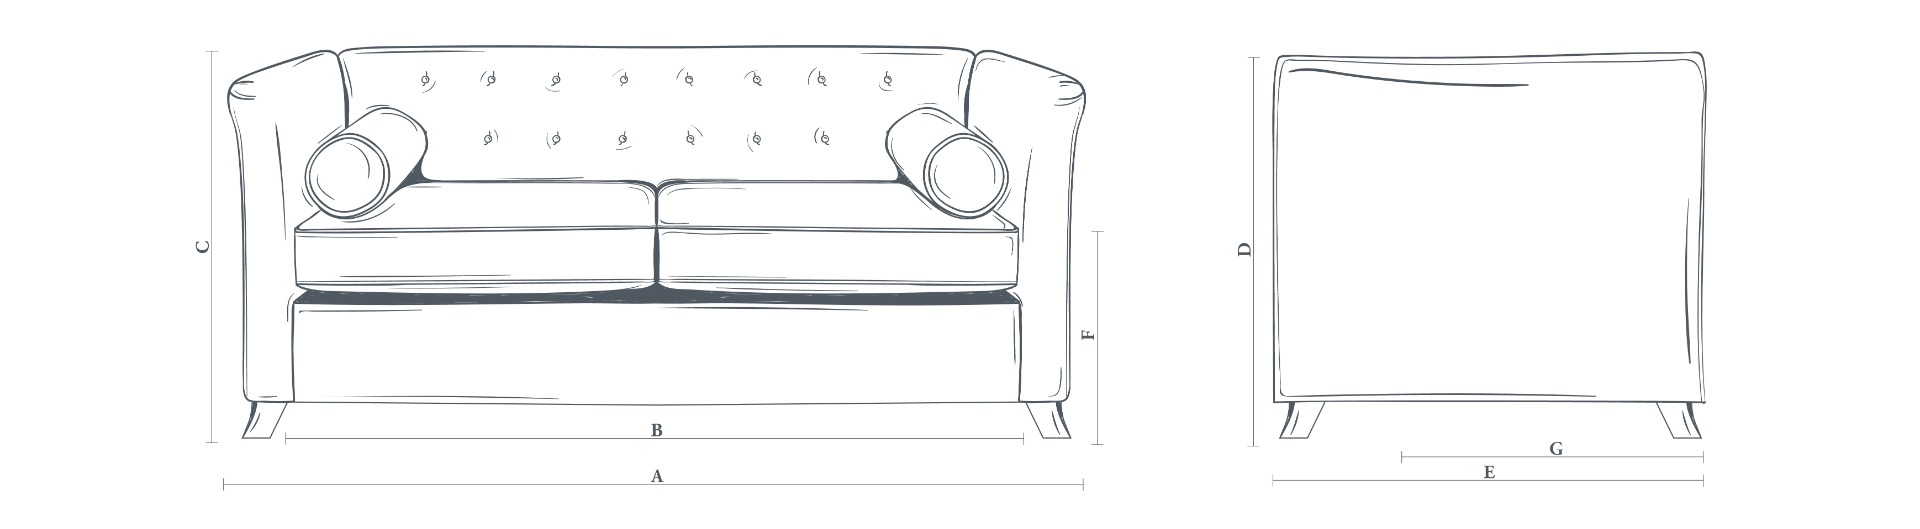 The Gastard Sofa 3.5 Seater